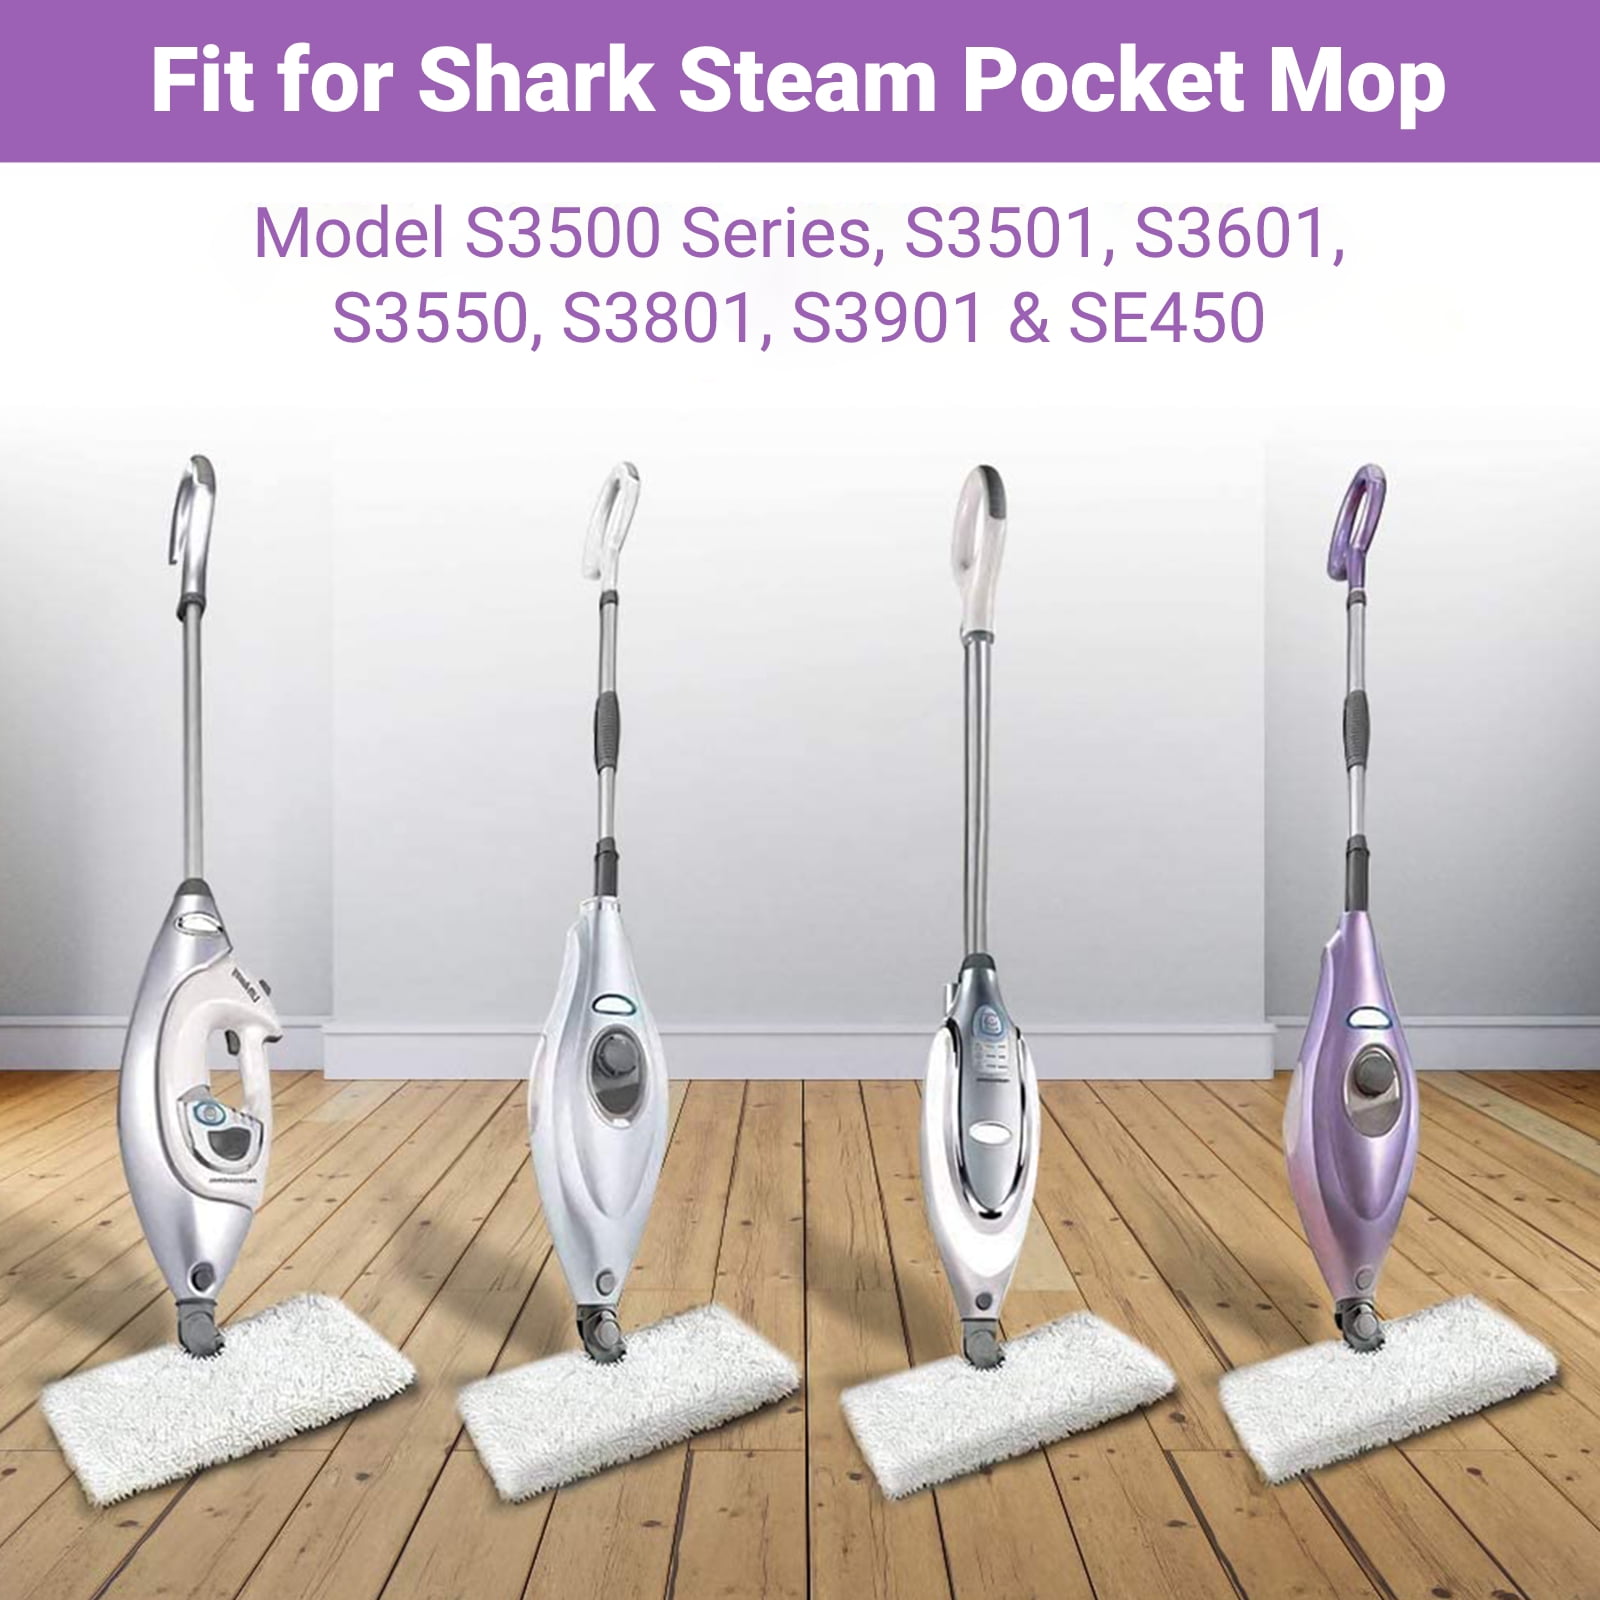 6 Pack Steam Mop Replacement Pads for Shark S3500 Series Steam Mop